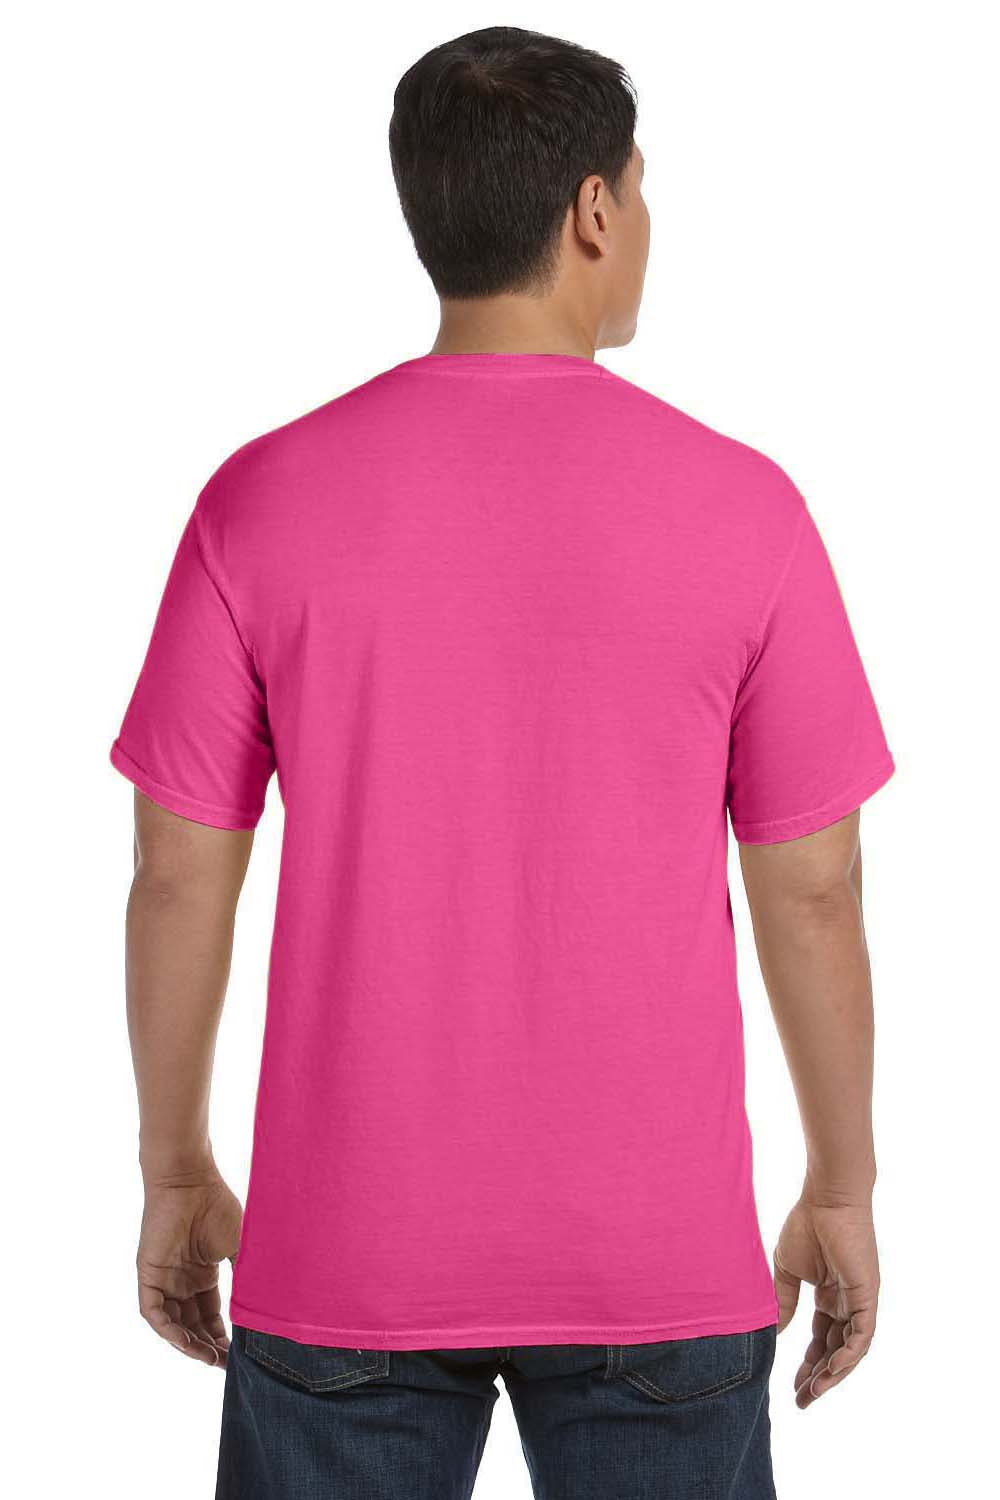 Comfort Colors C1717 Mens Short Sleeve Crewneck T-Shirt Peony Pink Back